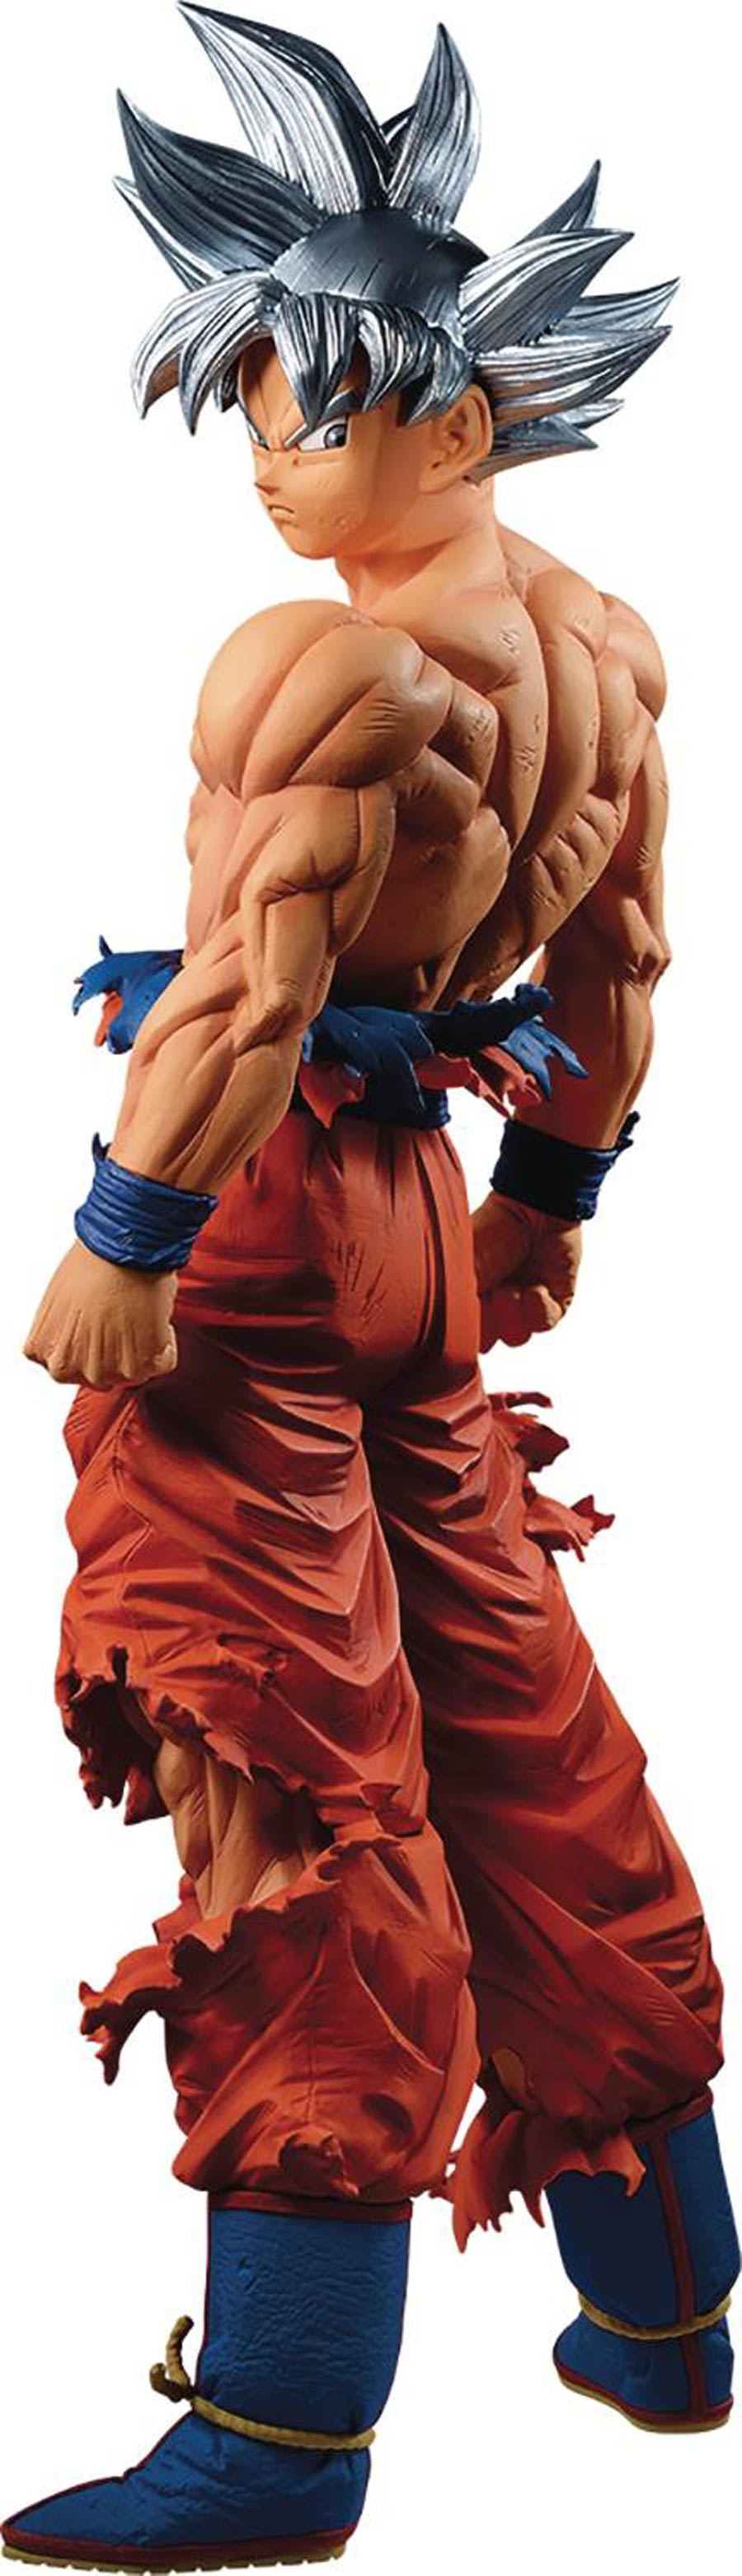 Dragon Ball Super Ichiban - Son Goku Ultra Instinct (Extreme Saiyan) Figure